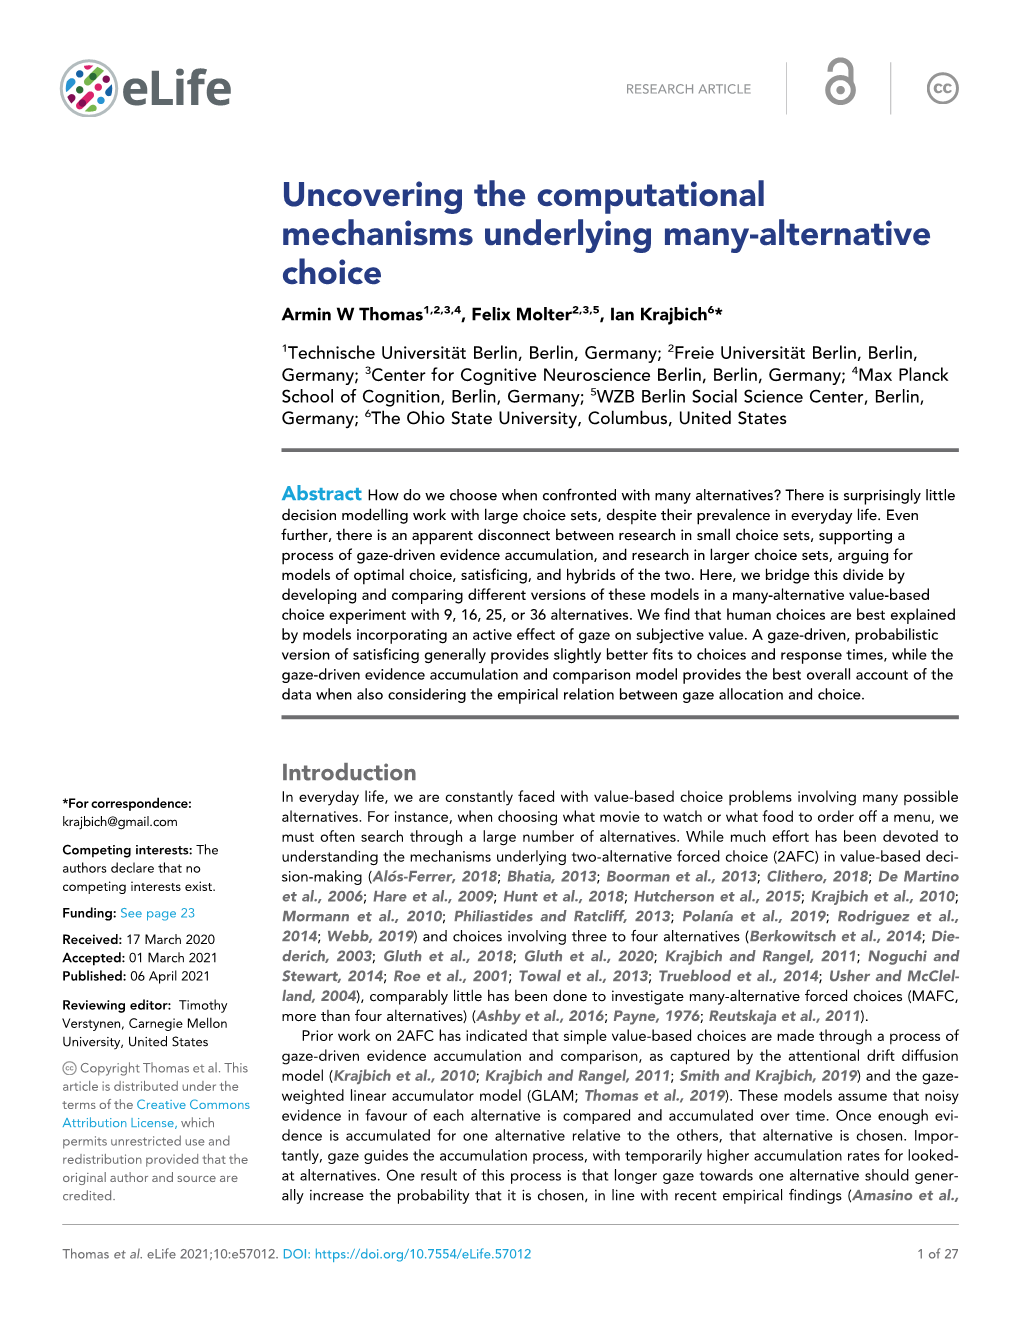 Uncovering the Computational Mechanisms Underlying Many-Alternative Choice Armin W Thomas1,2,3,4, Felix Molter2,3,5, Ian Krajbich6*